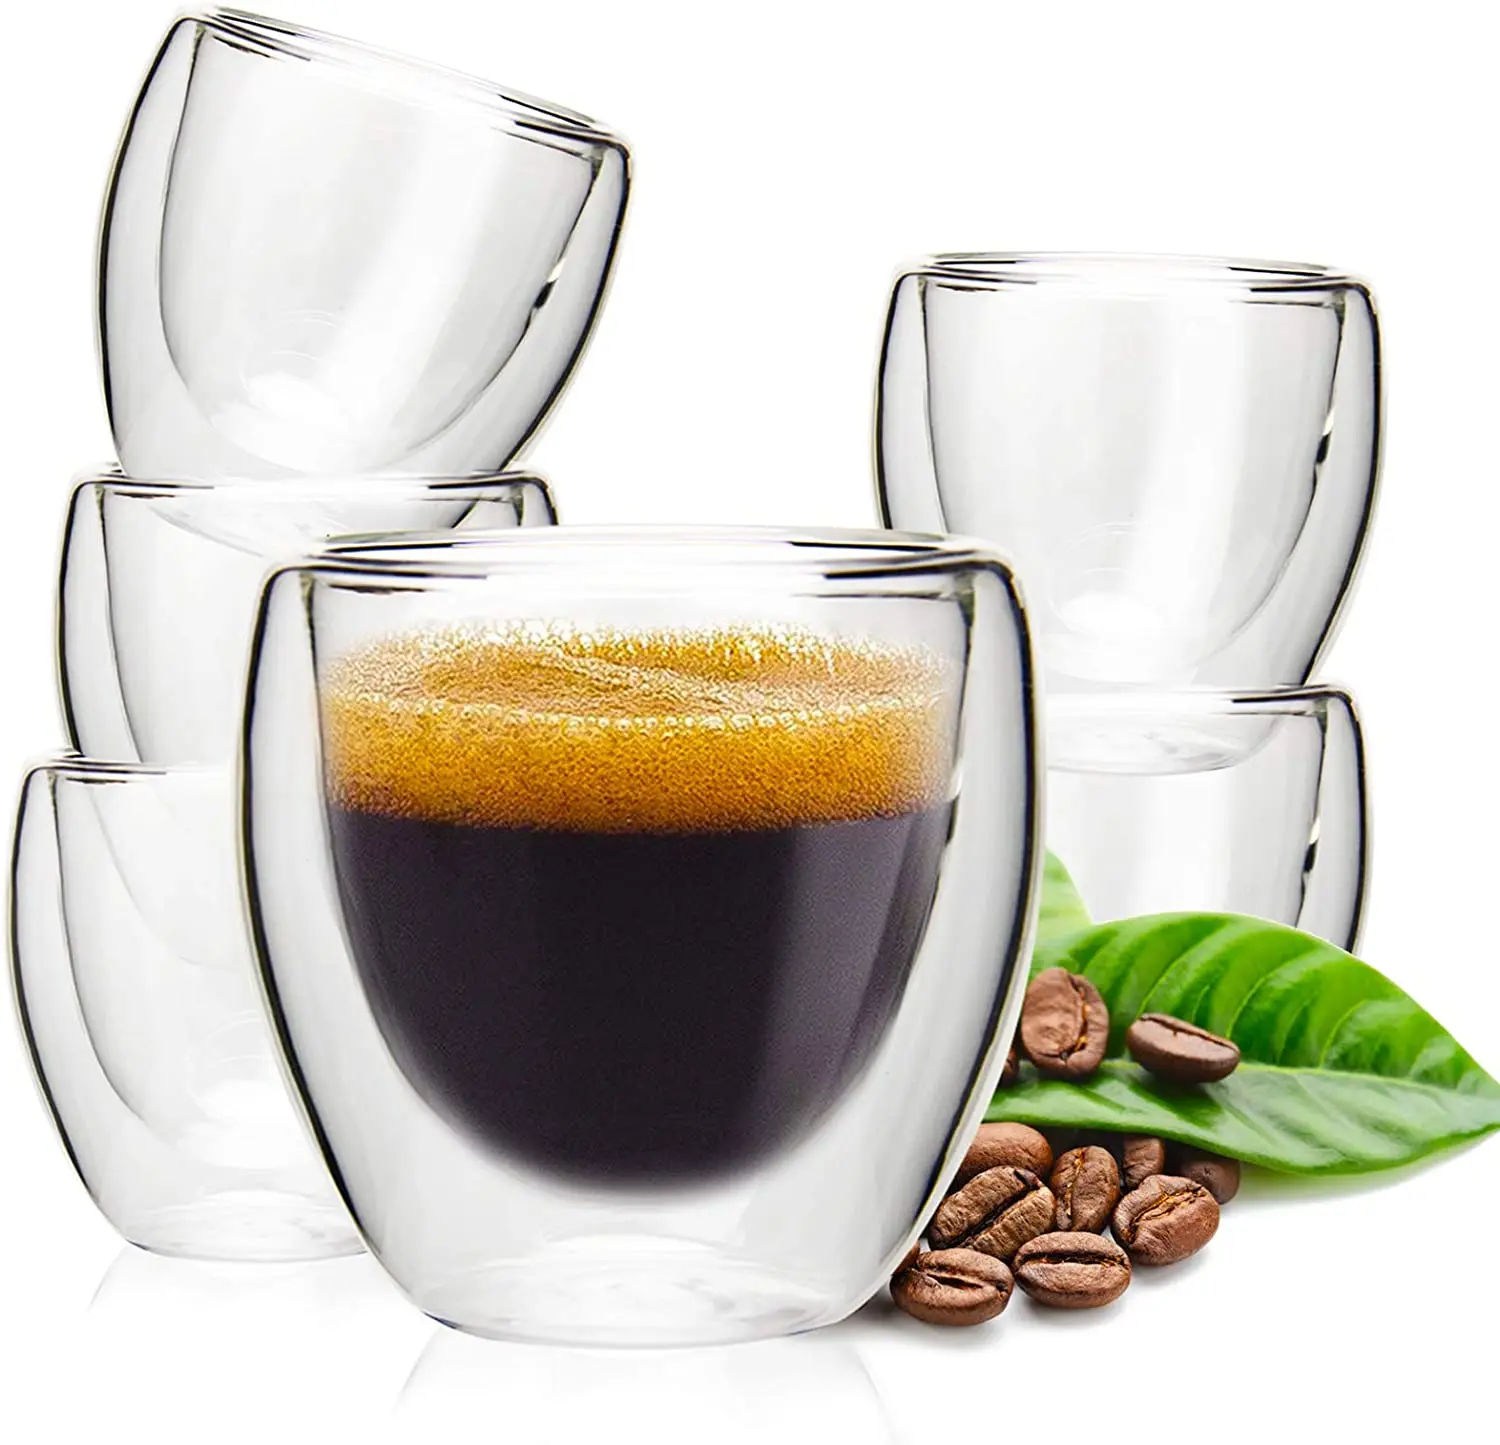 Customizable Logo 2.7oz Double Wall Glass Coffee Mug Espresso Cups